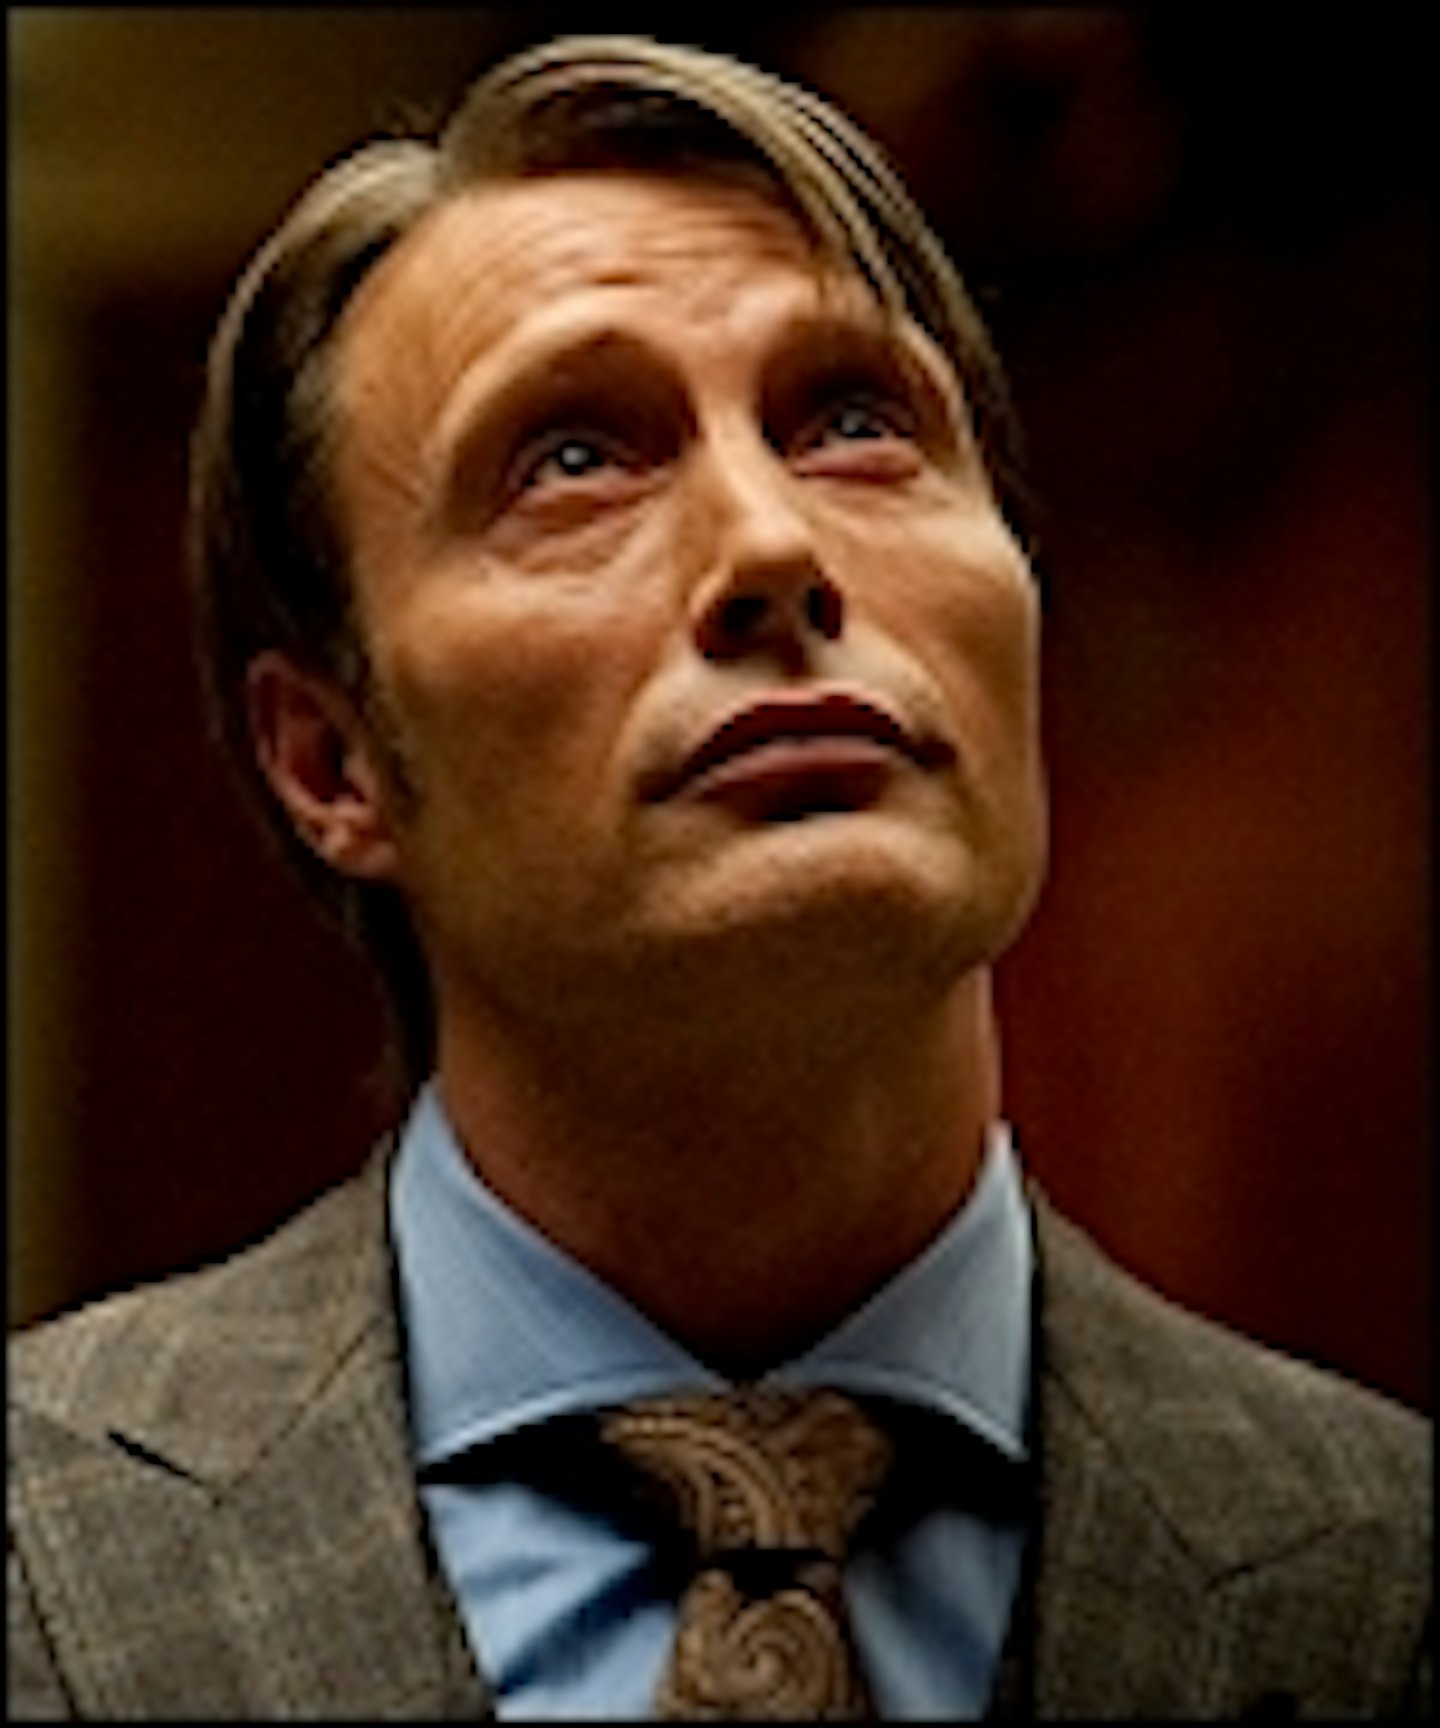 Hannibal Season 3 Trailer Served Up Online